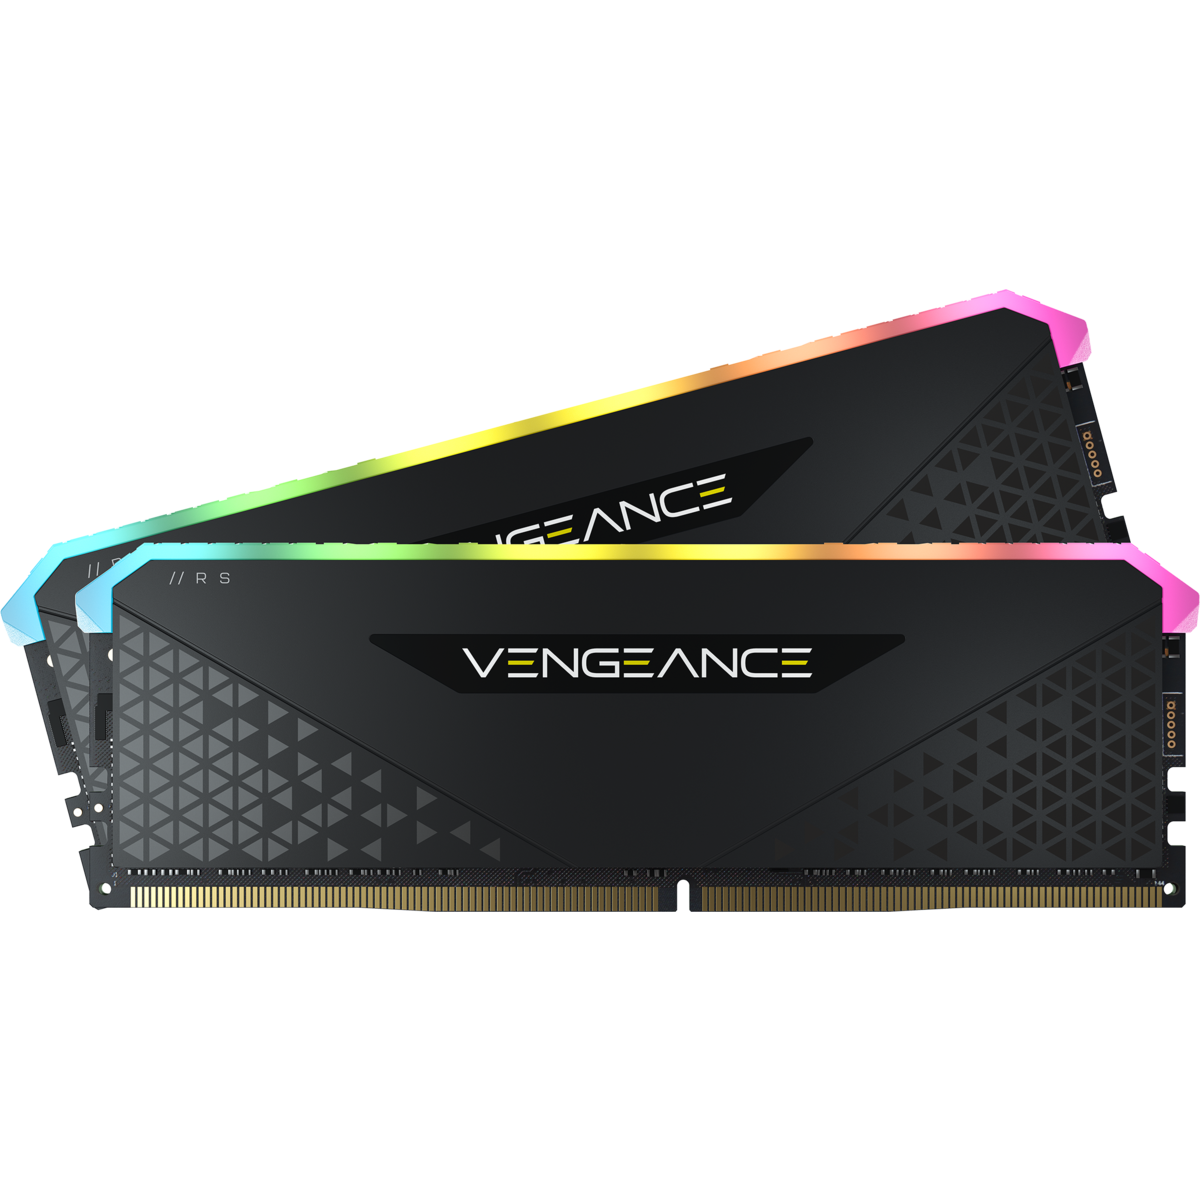 CORSAIR VENGEANCE RGB RS 16GB (8GB x 2) DDR4 3200MHz C16 Desktop Memory Kit